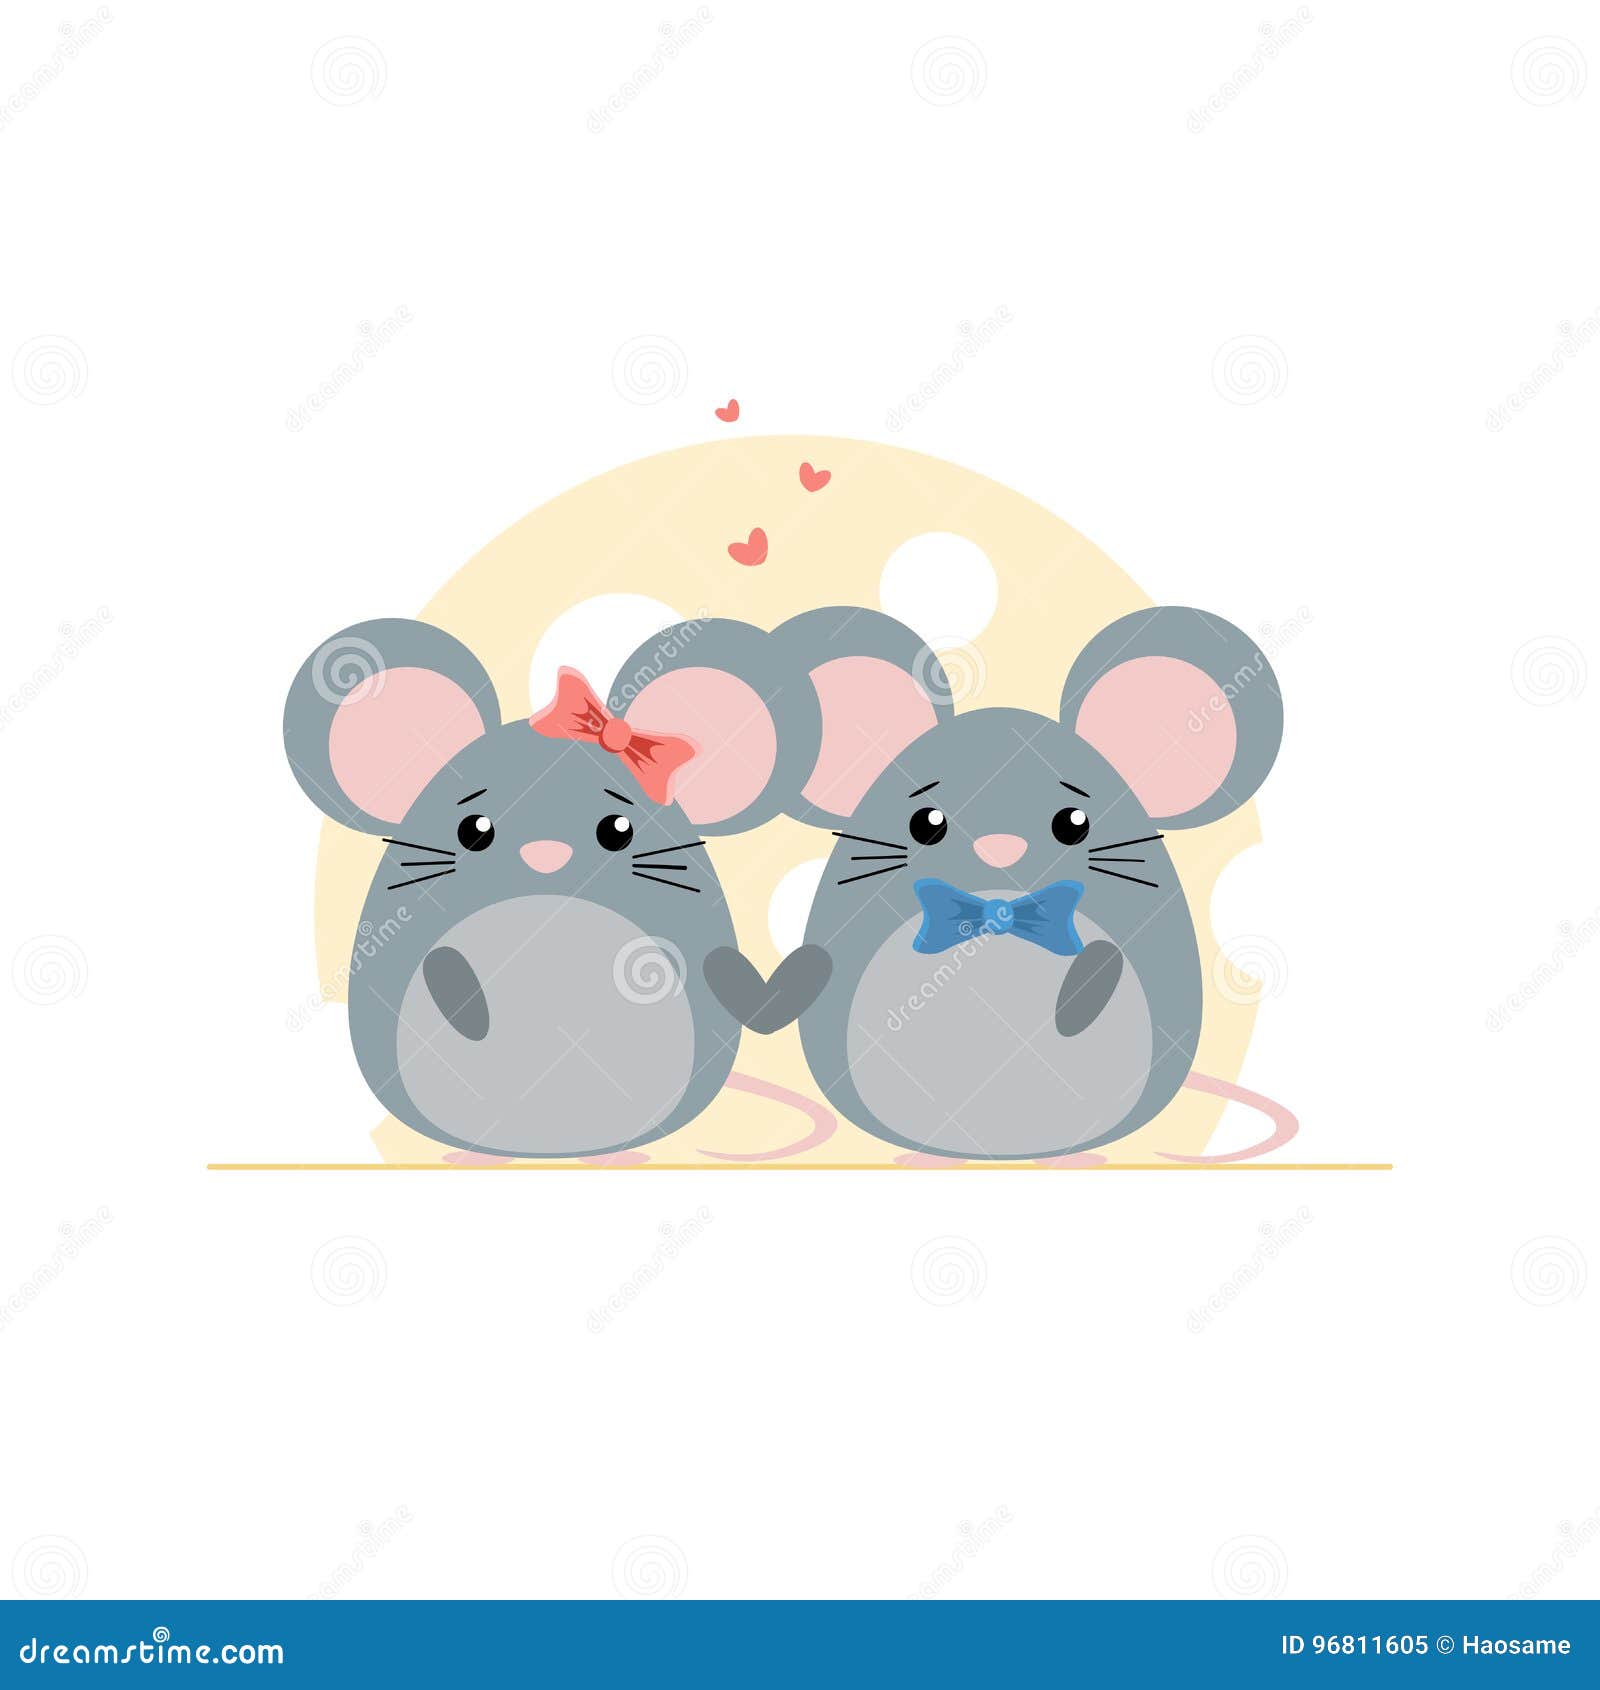 Мыши пара. Влюбленные мышки. Пара мышек. Мультяшные мышки пара. Две влюбленные мыши.